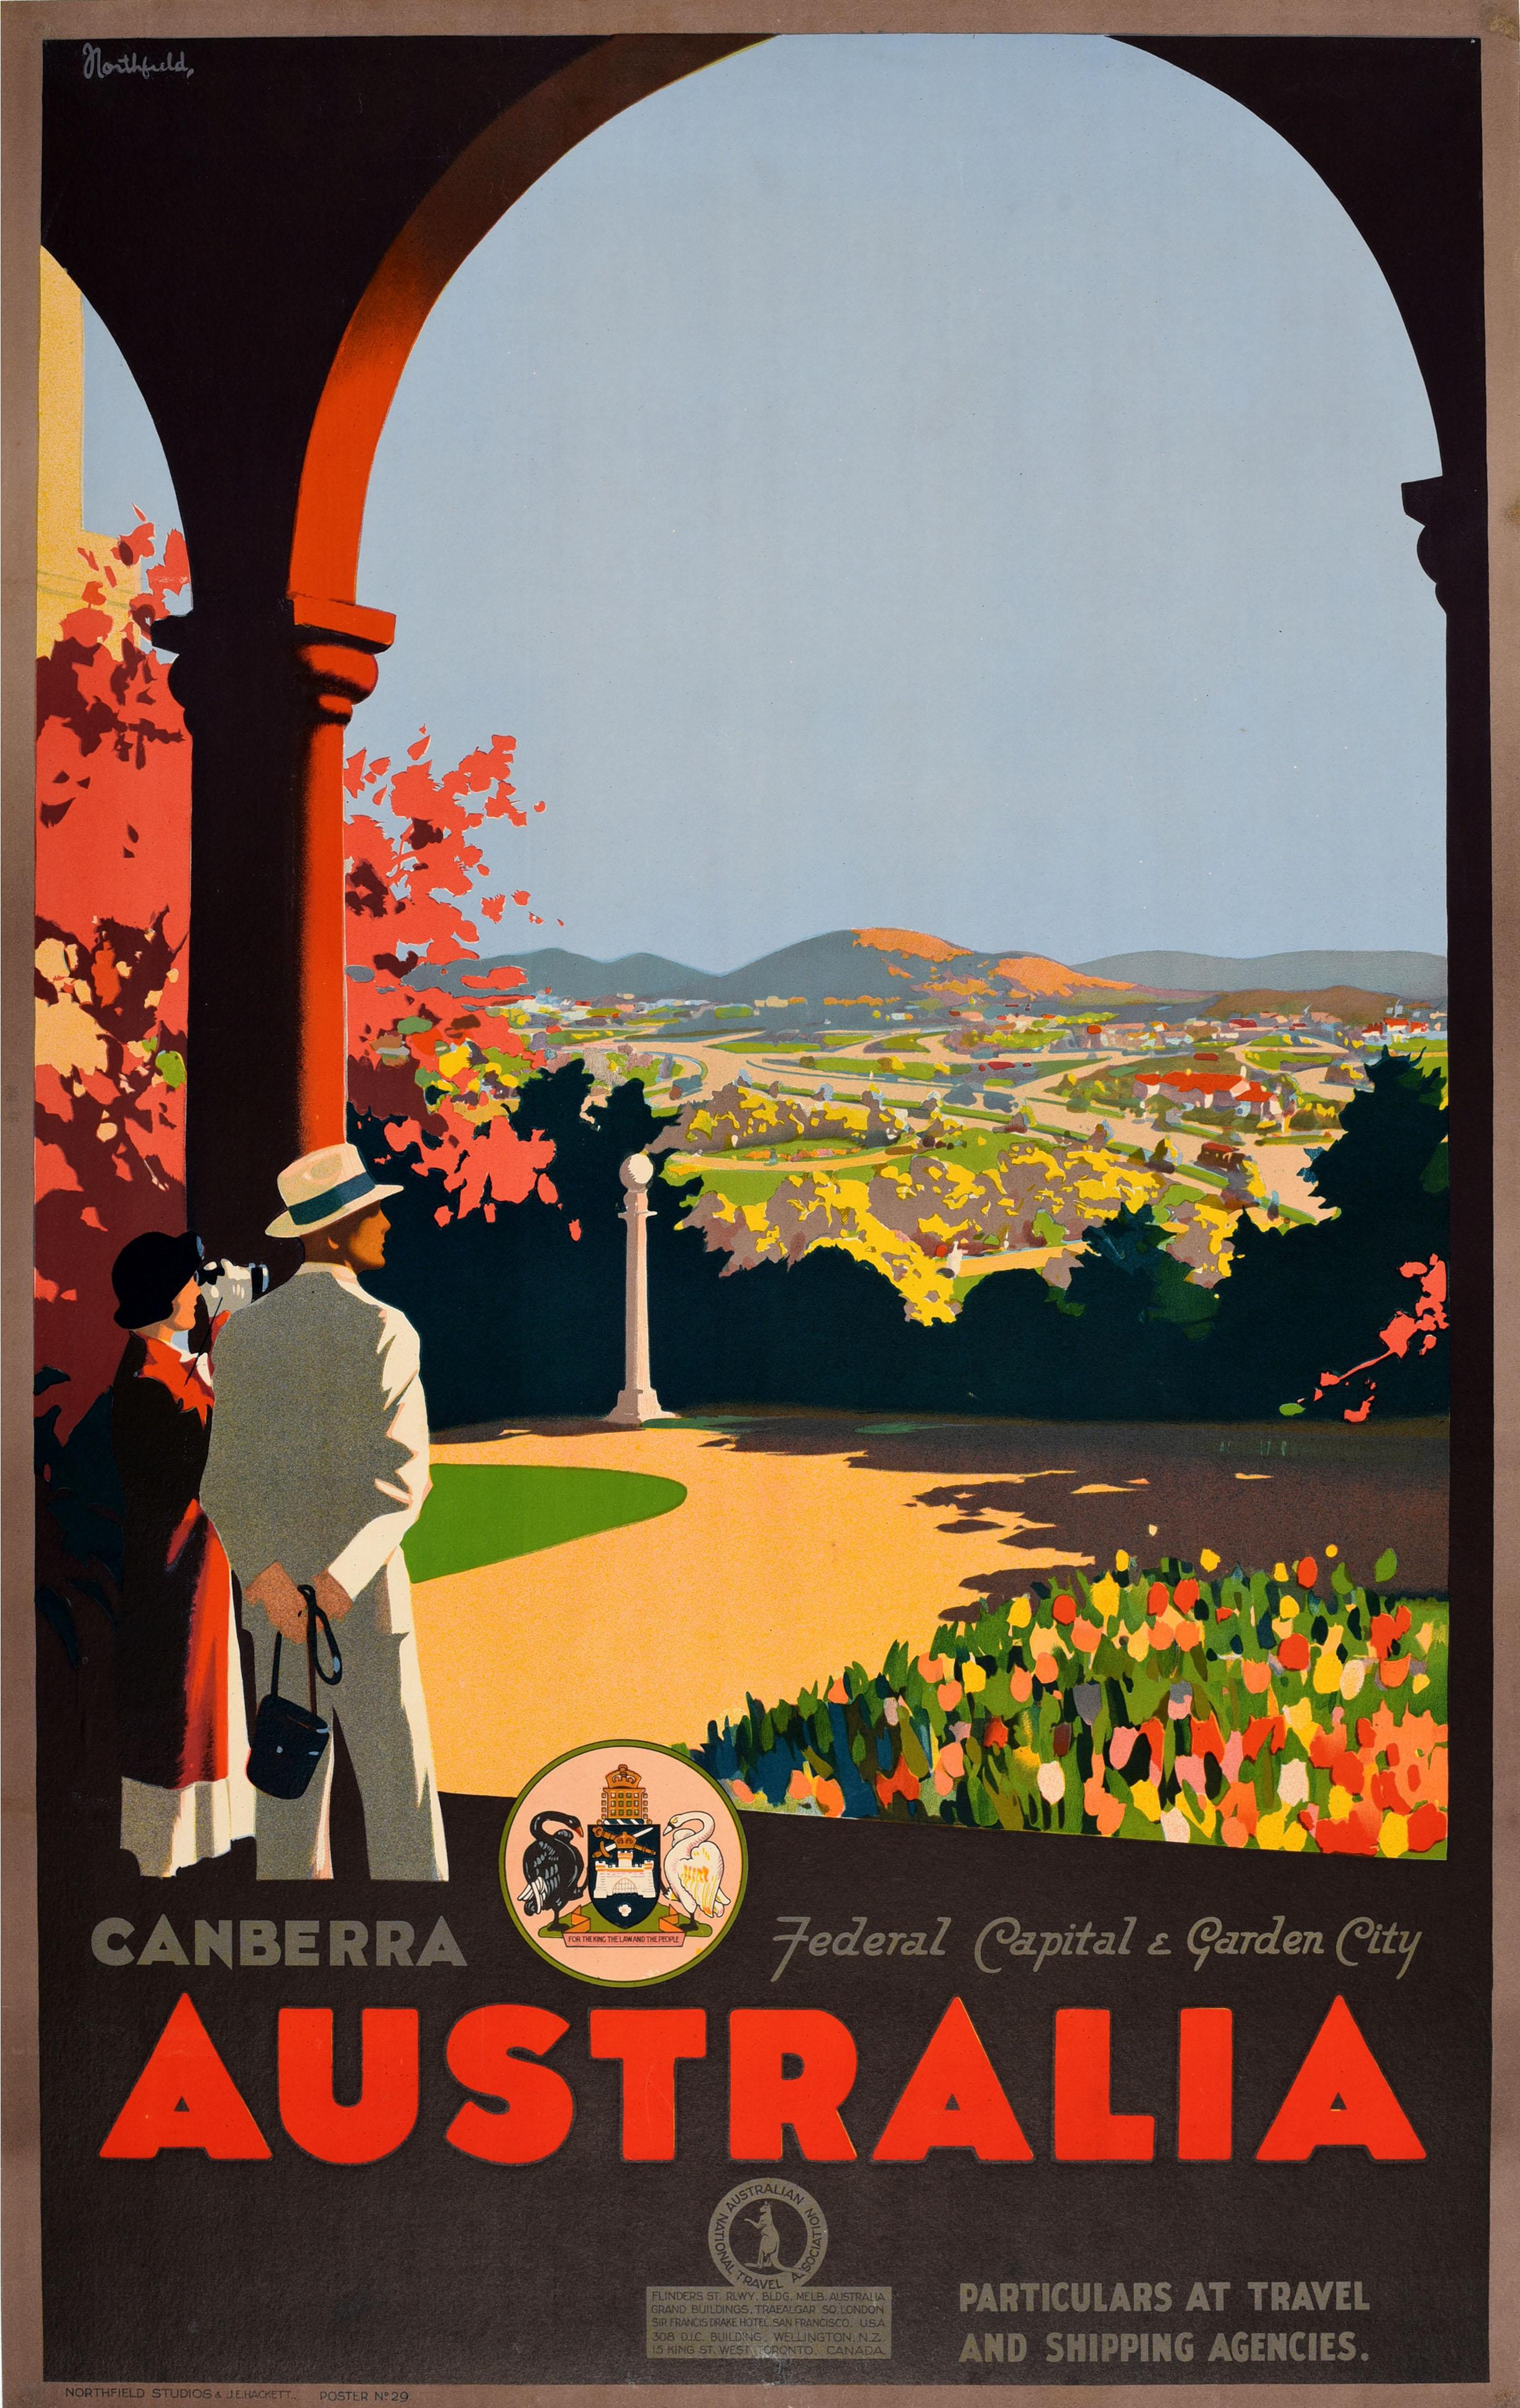 James Northfield Print - Original Vintage Travel Poster Australia Canberra Federal Capital & Garden City 